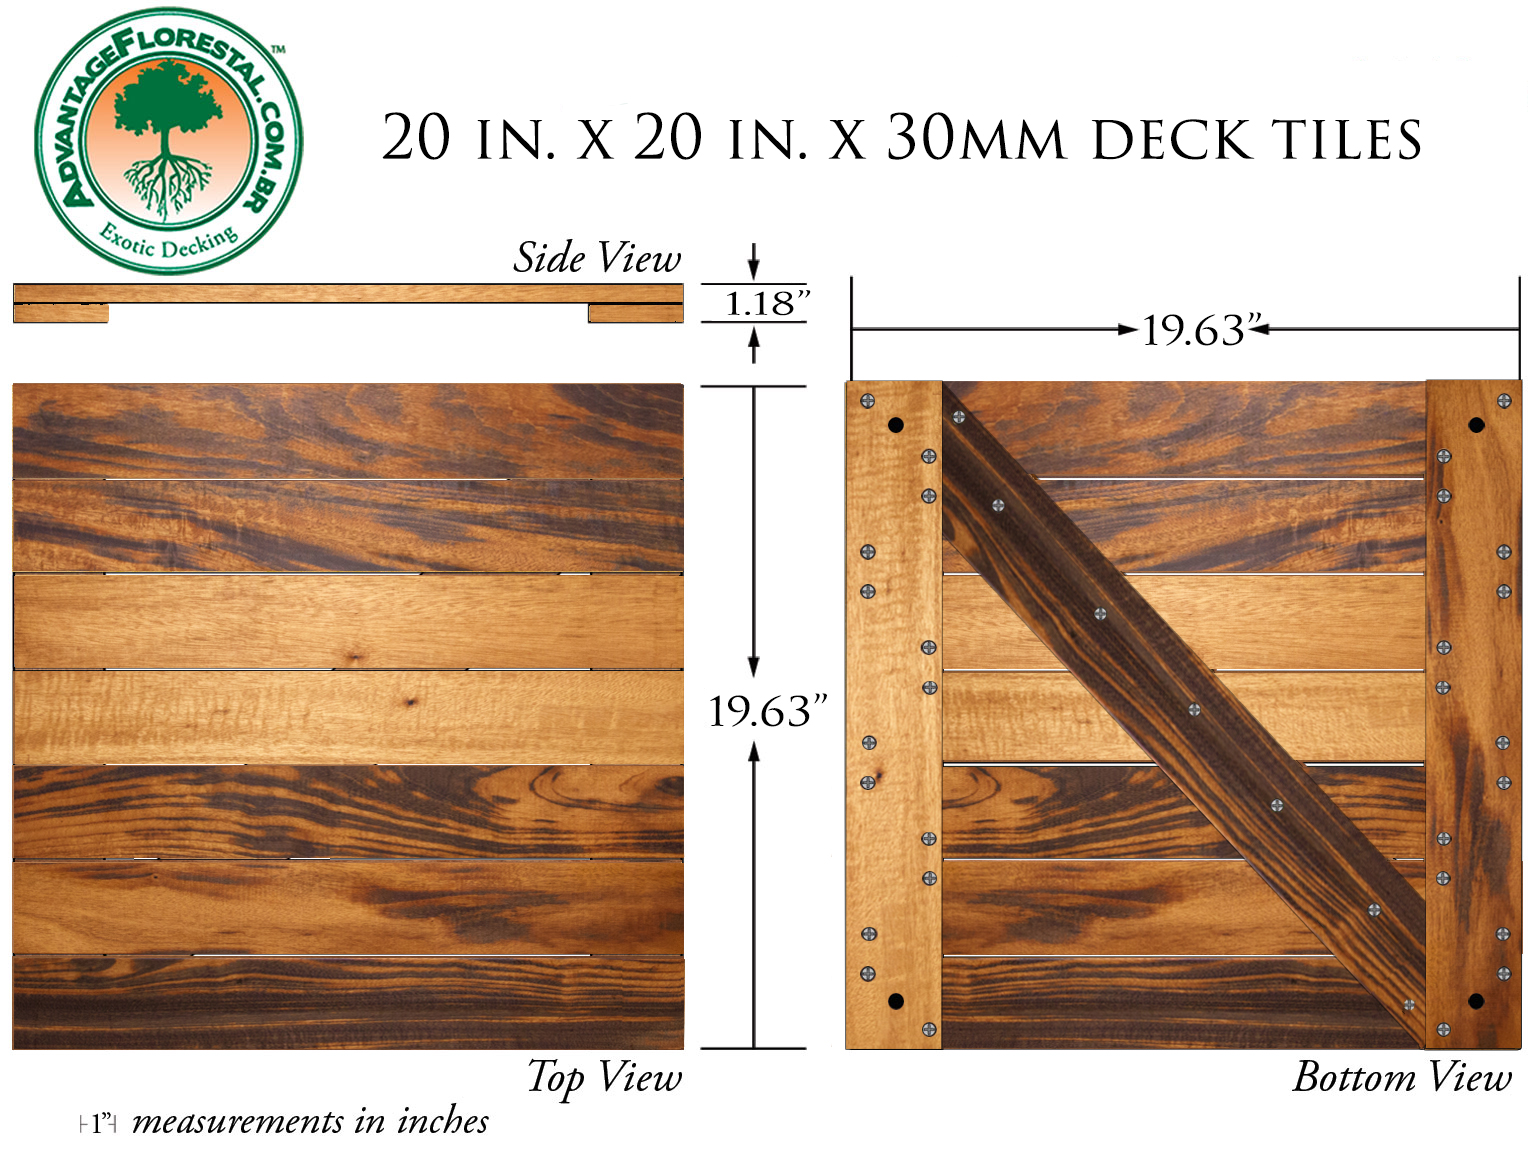 Tigerwood Deck Tile 20 in. x 20 in. x 30mm